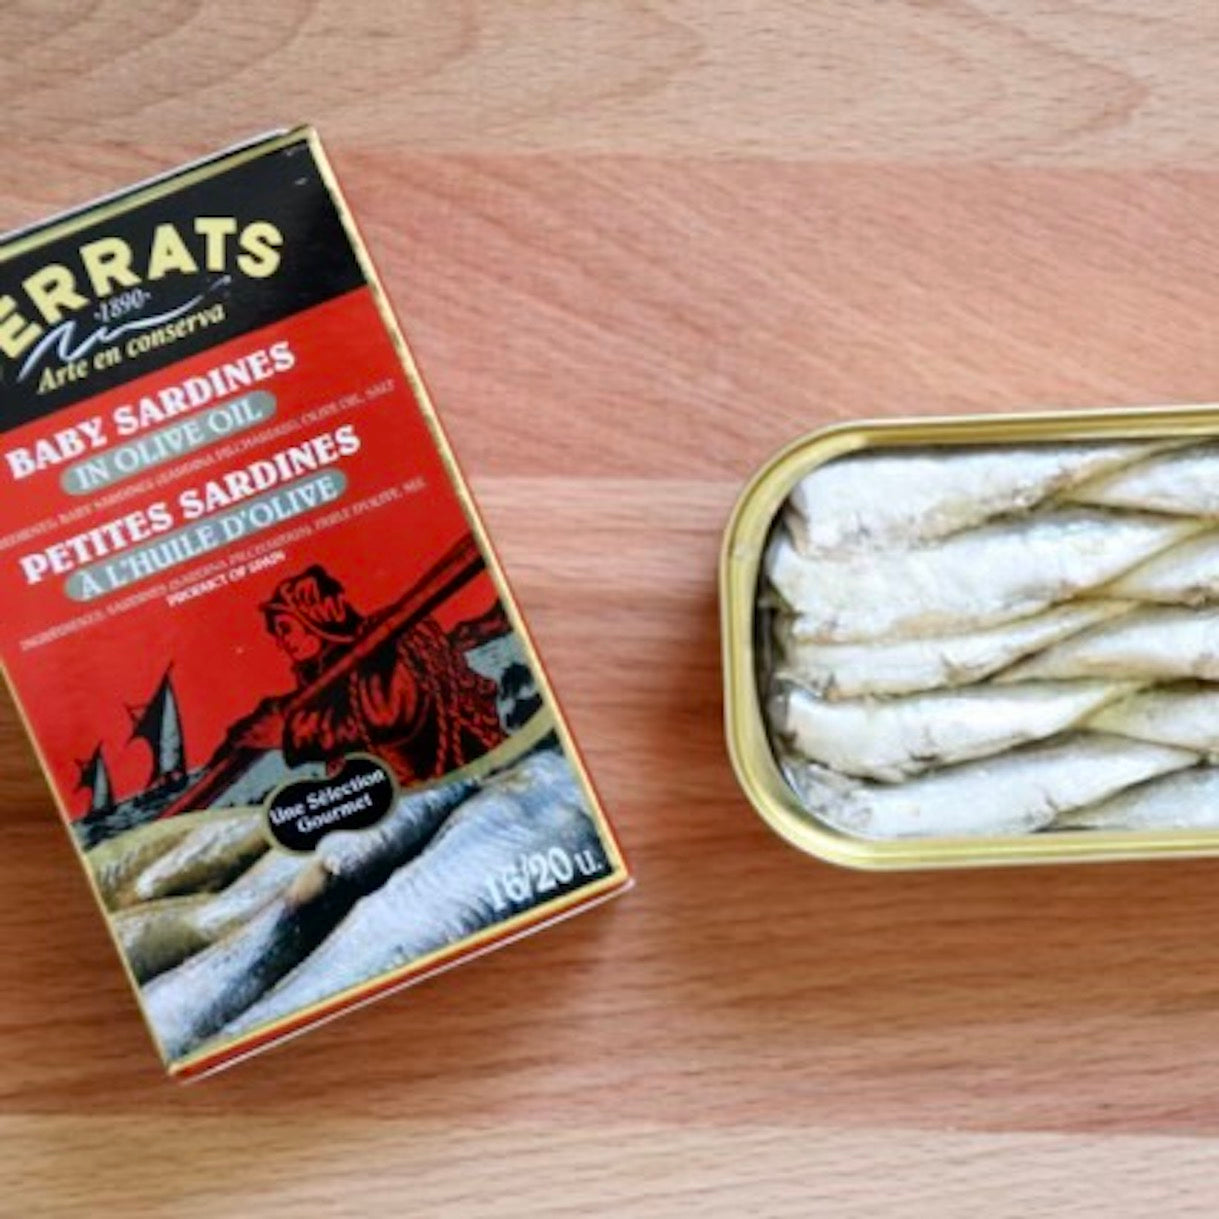 Baby sardines in Olive Oil | Spain | 125g